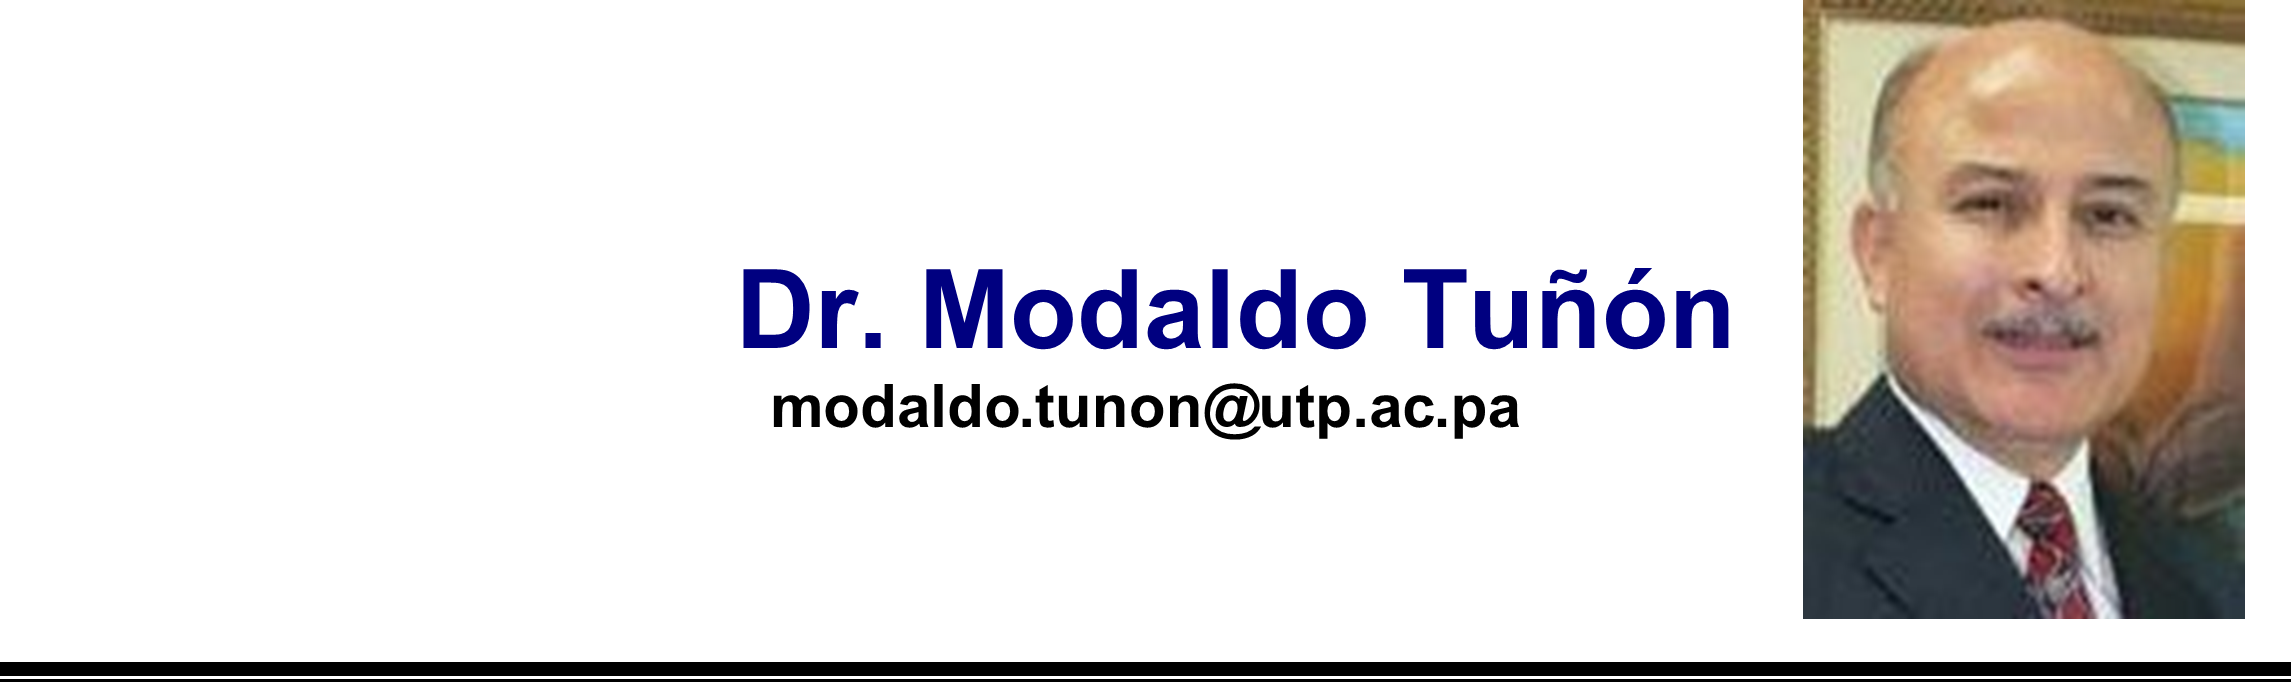 Modaldo T.png